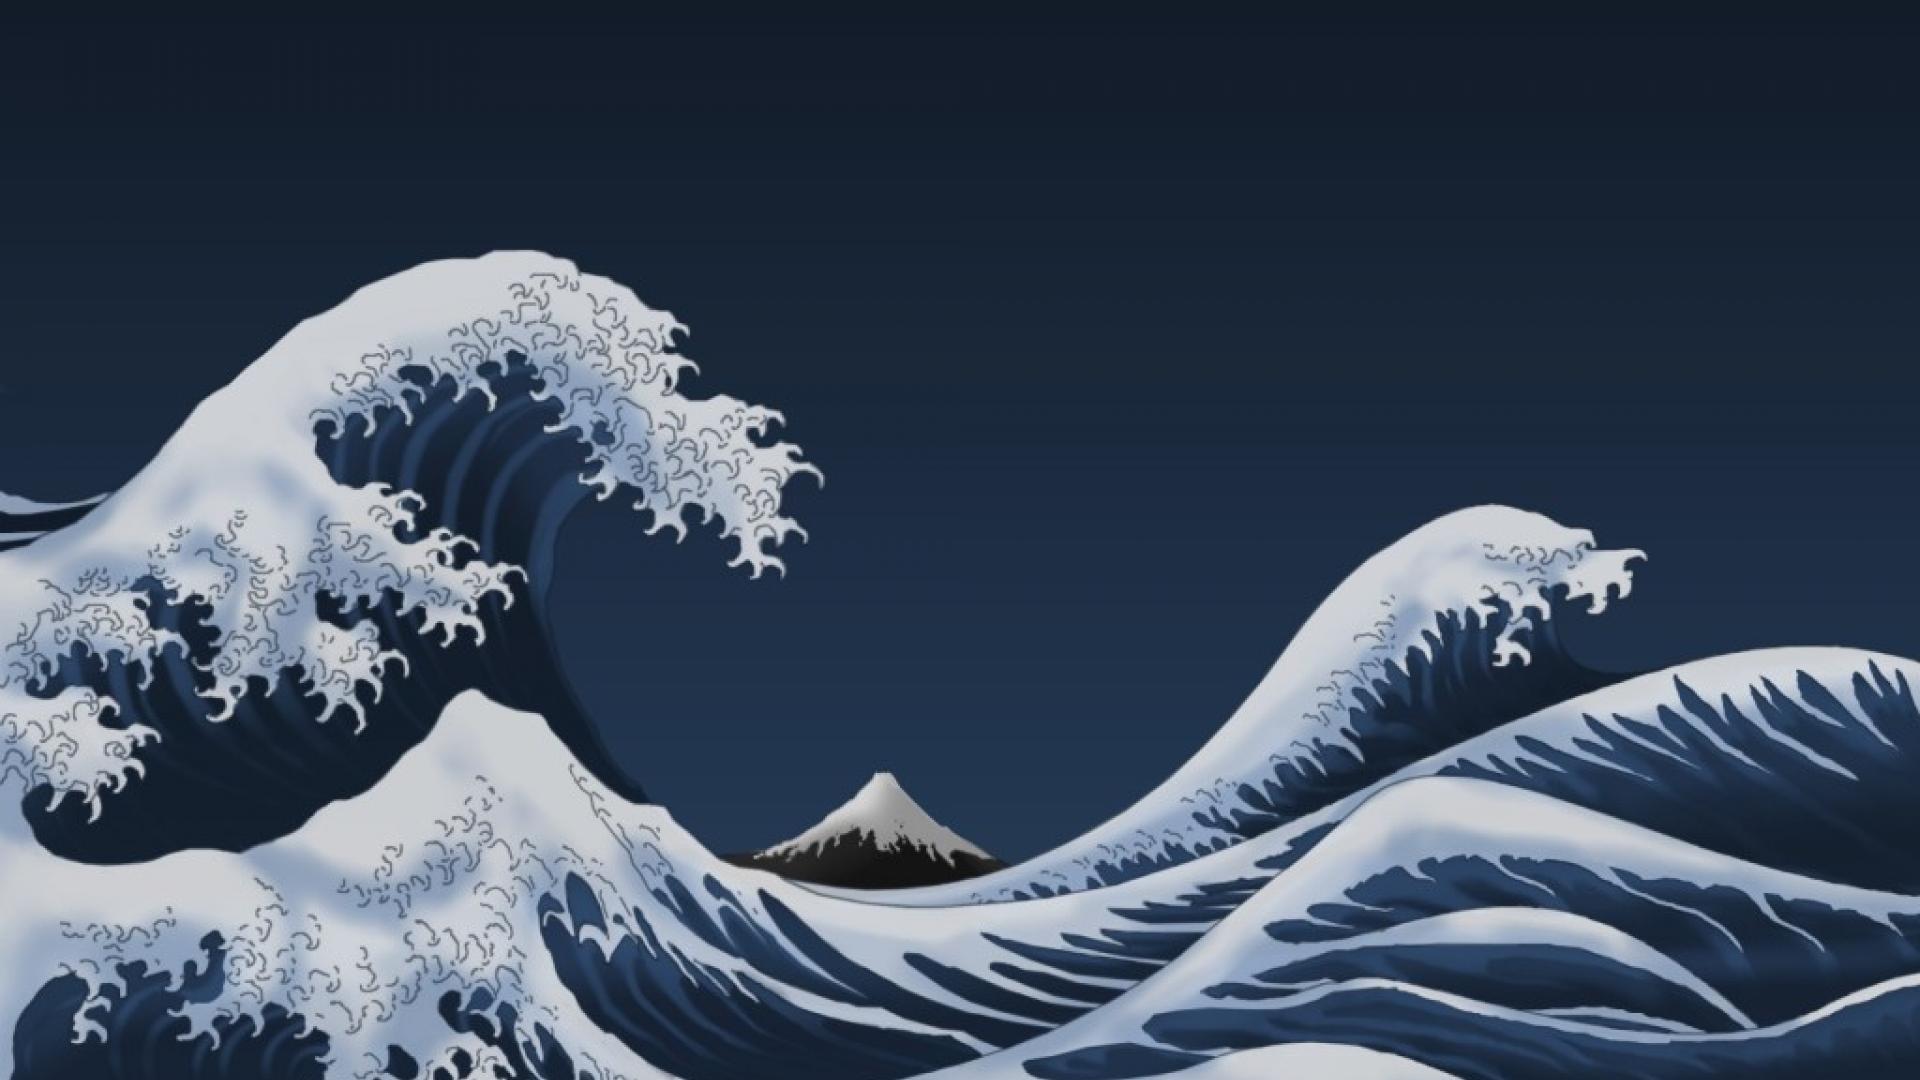 🔥 43 Great Wave Off Kanagawa Wallpaper Wallpapersafari